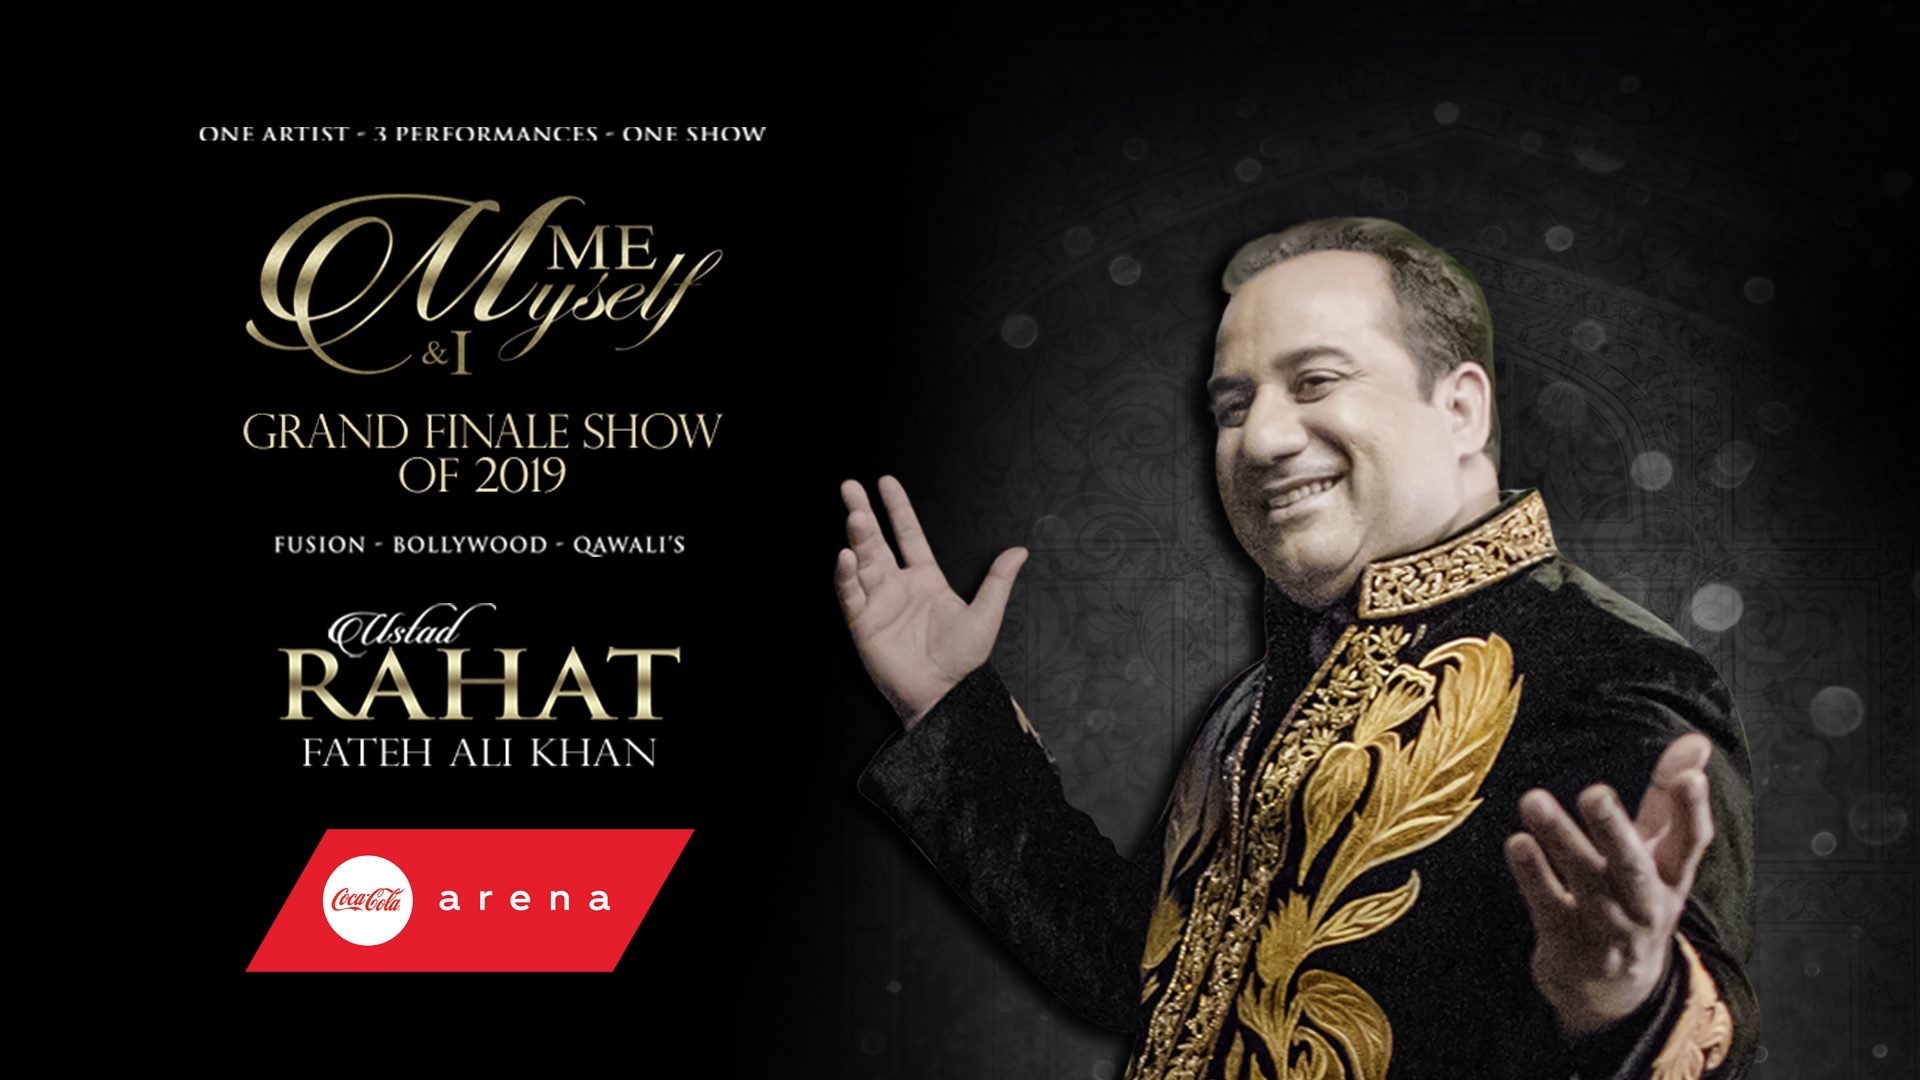 ‘Me, Myself & I’ Show by Ustad Rahat Fateh Ali Khan - Coming Soon in UAE